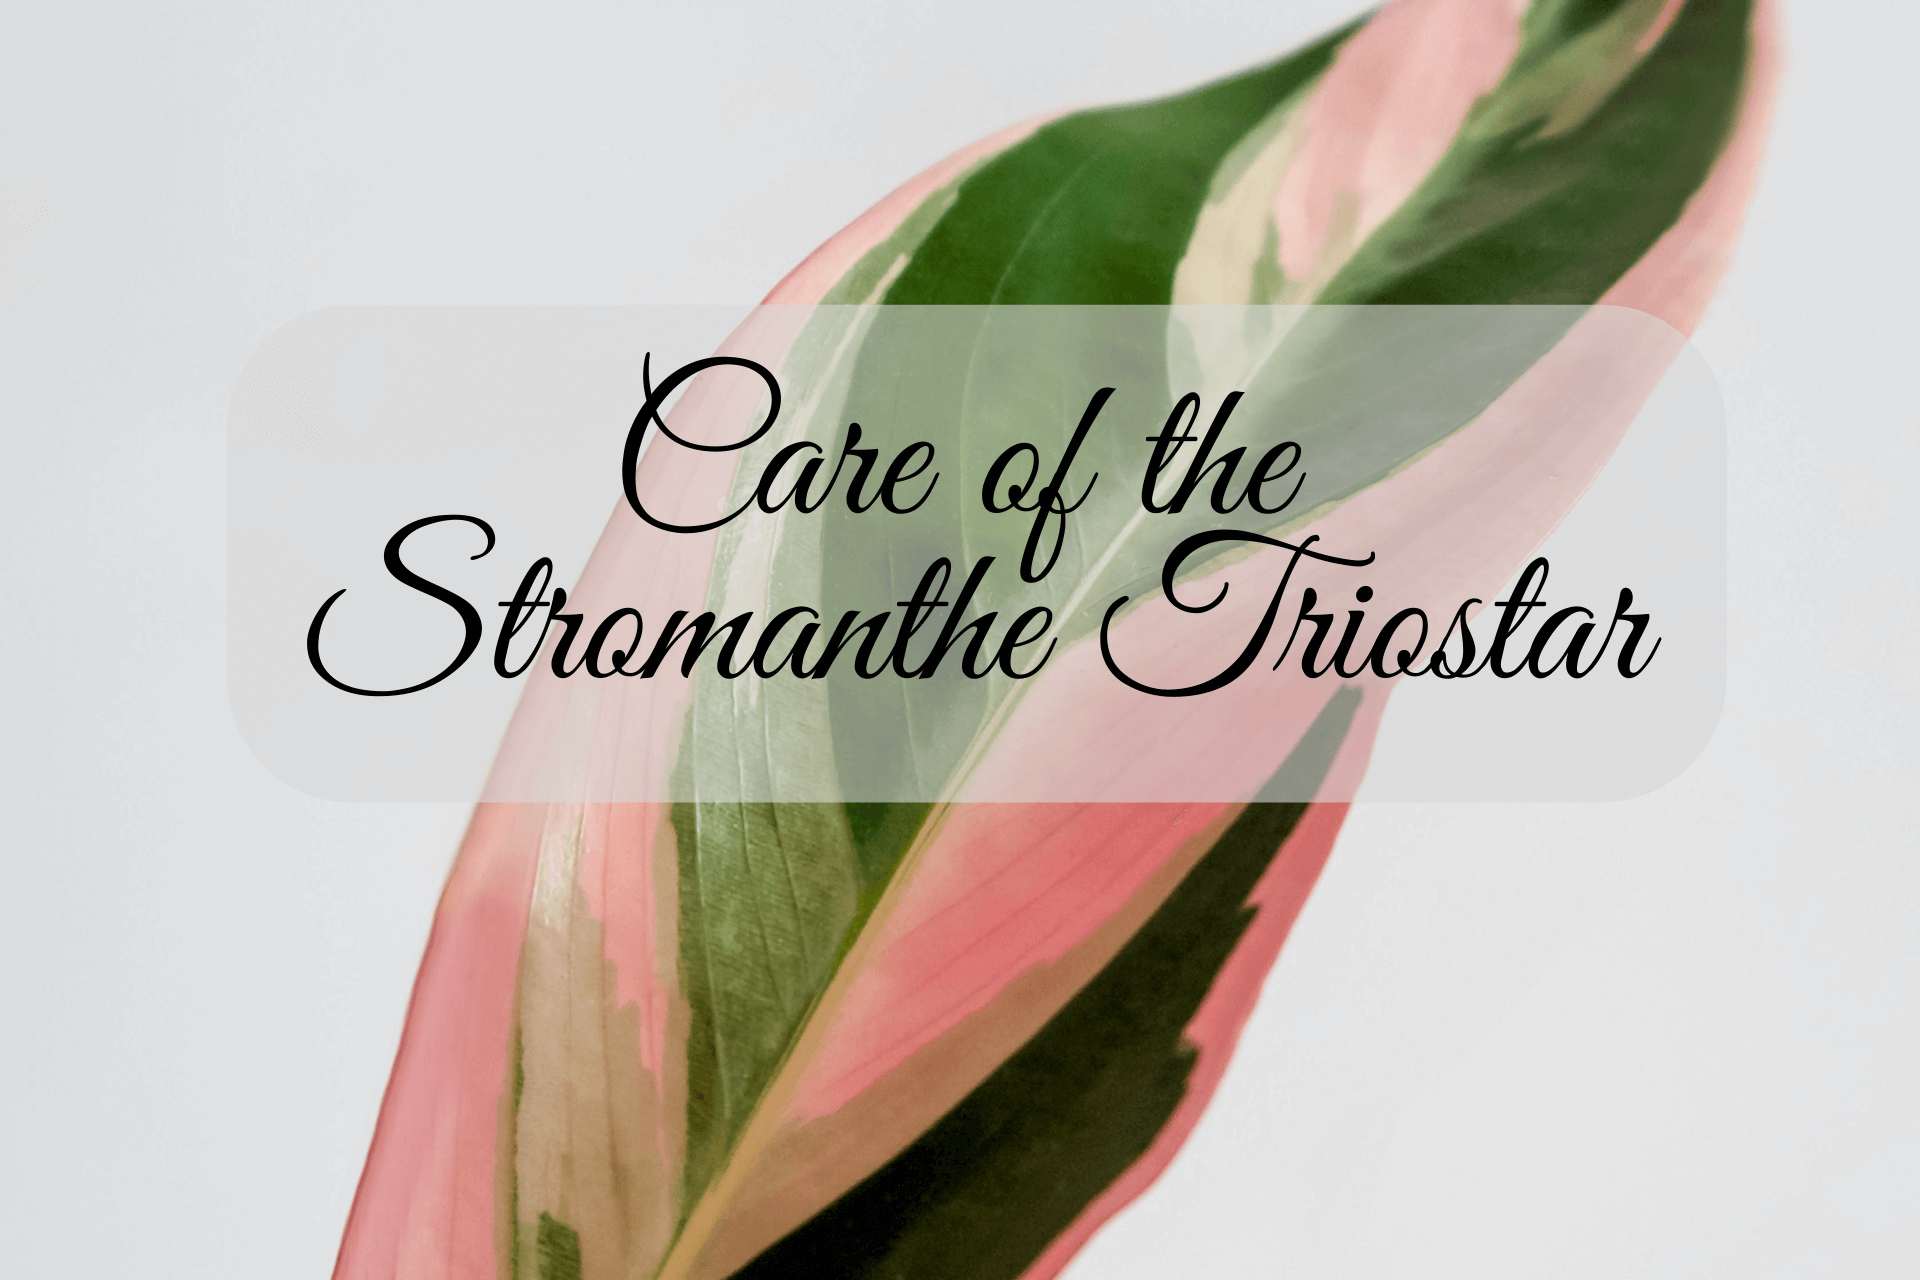 Triostar Stromanthe Care